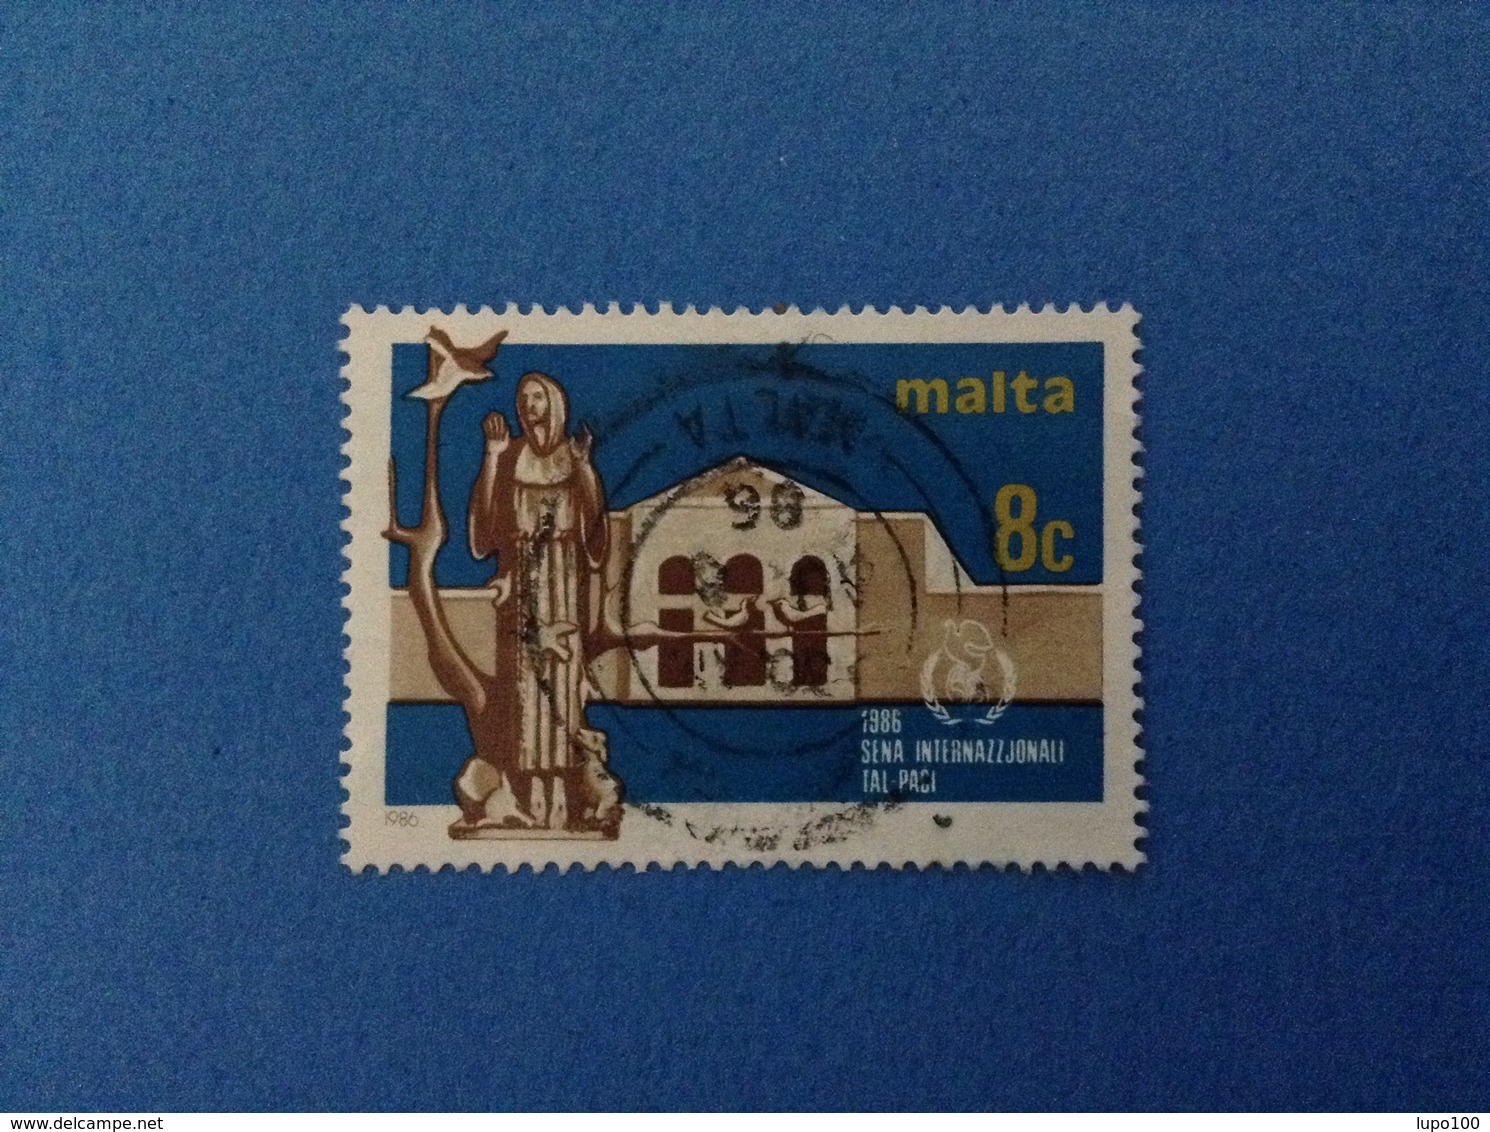 1986 MALTA FRANCOBOLLO USATO STAMP USED - 8 C - Malta